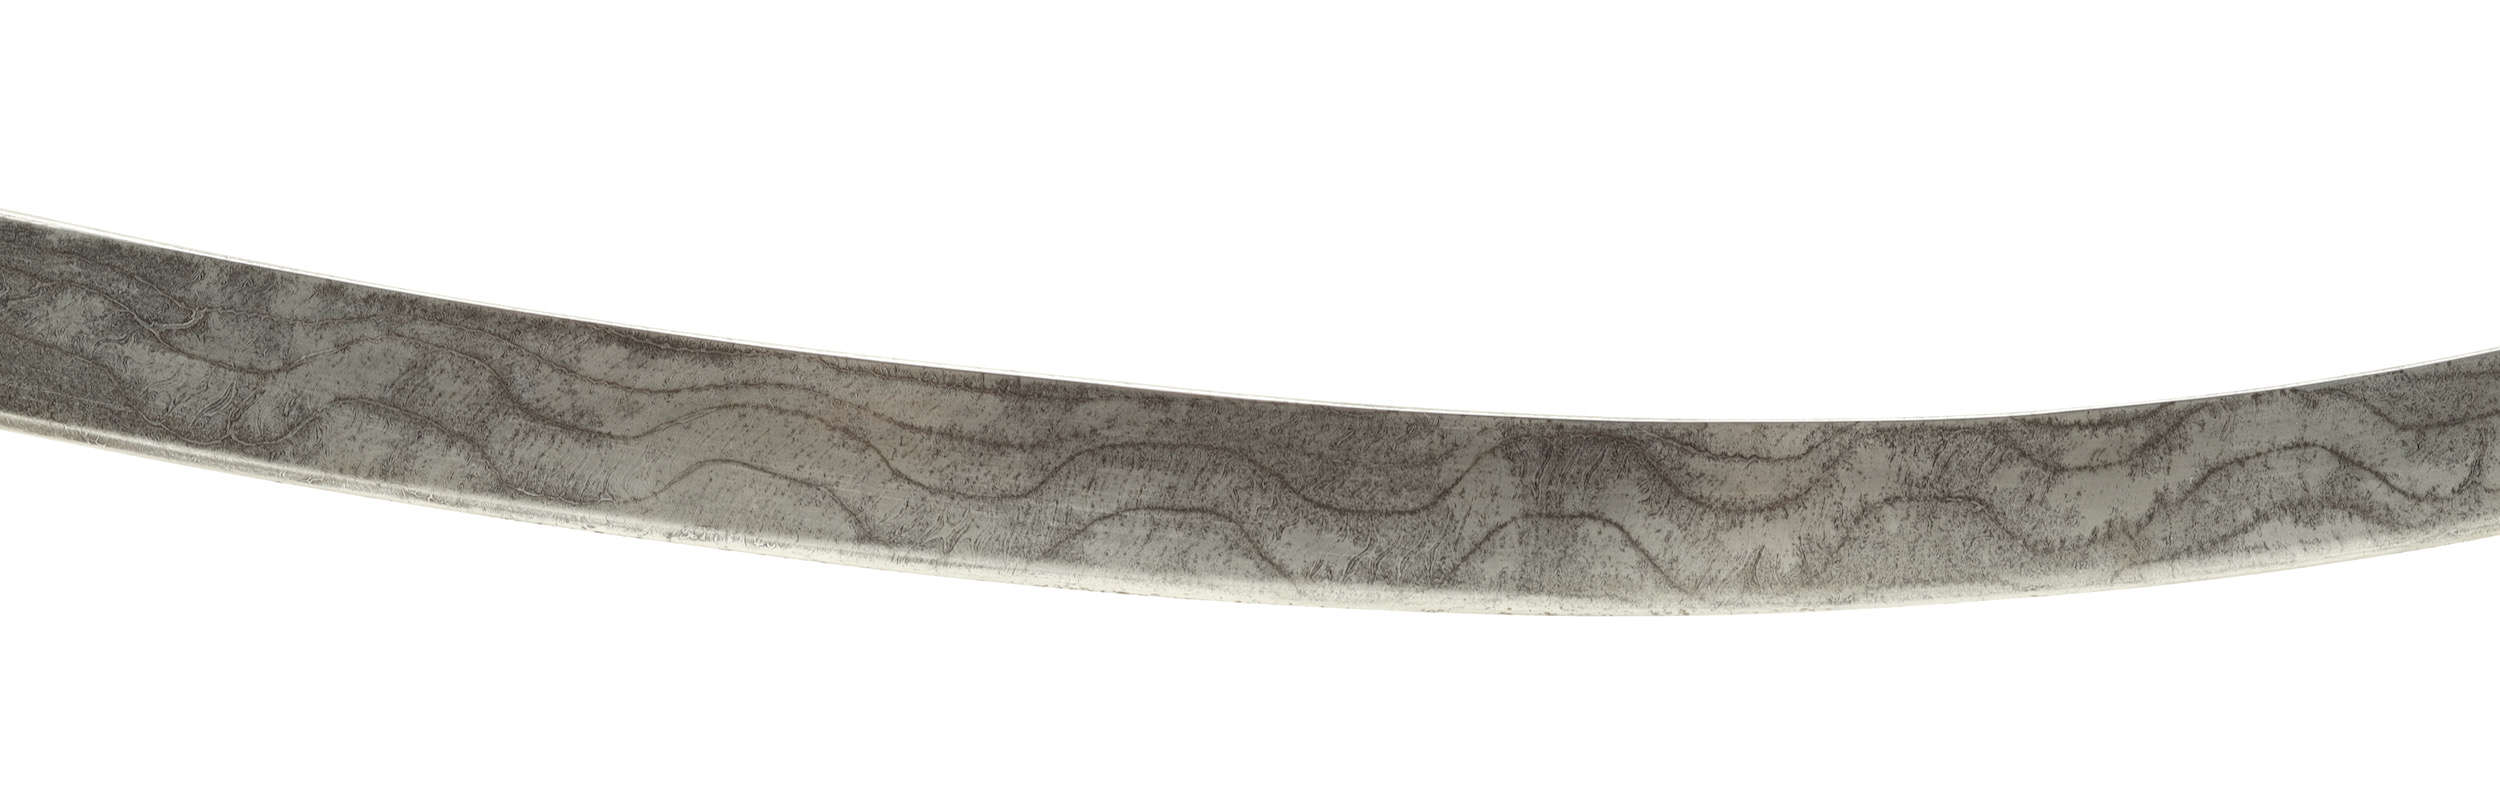 Ottoman turkish ribbon sword